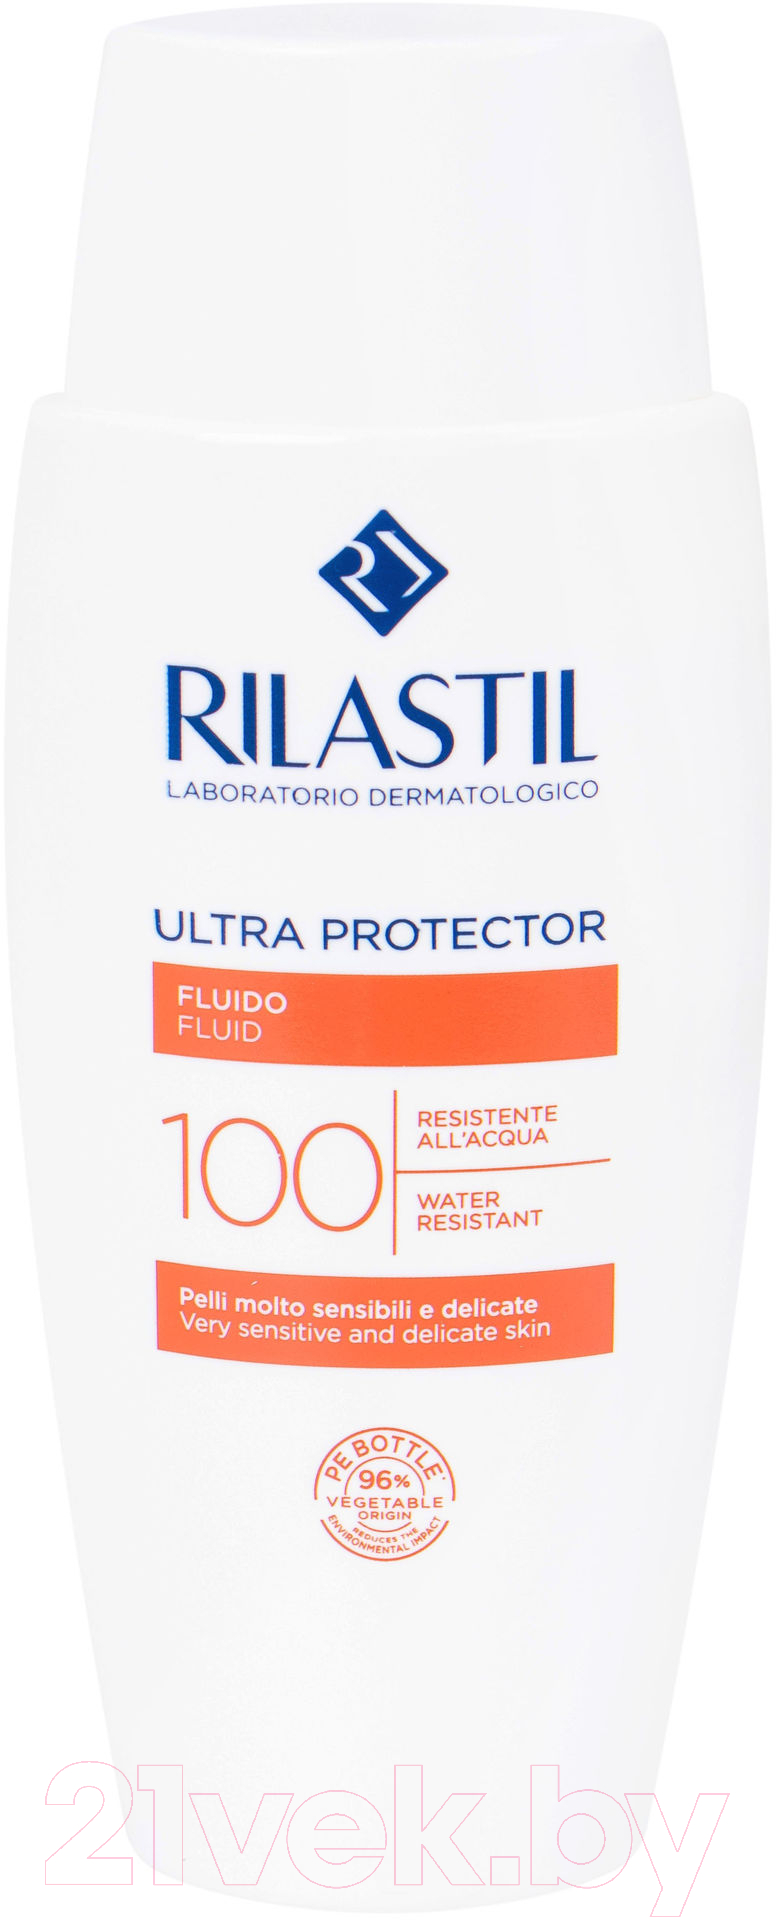 Крем солнцезащитный Rilastil Ультра защитный флюид 100 SPF50+